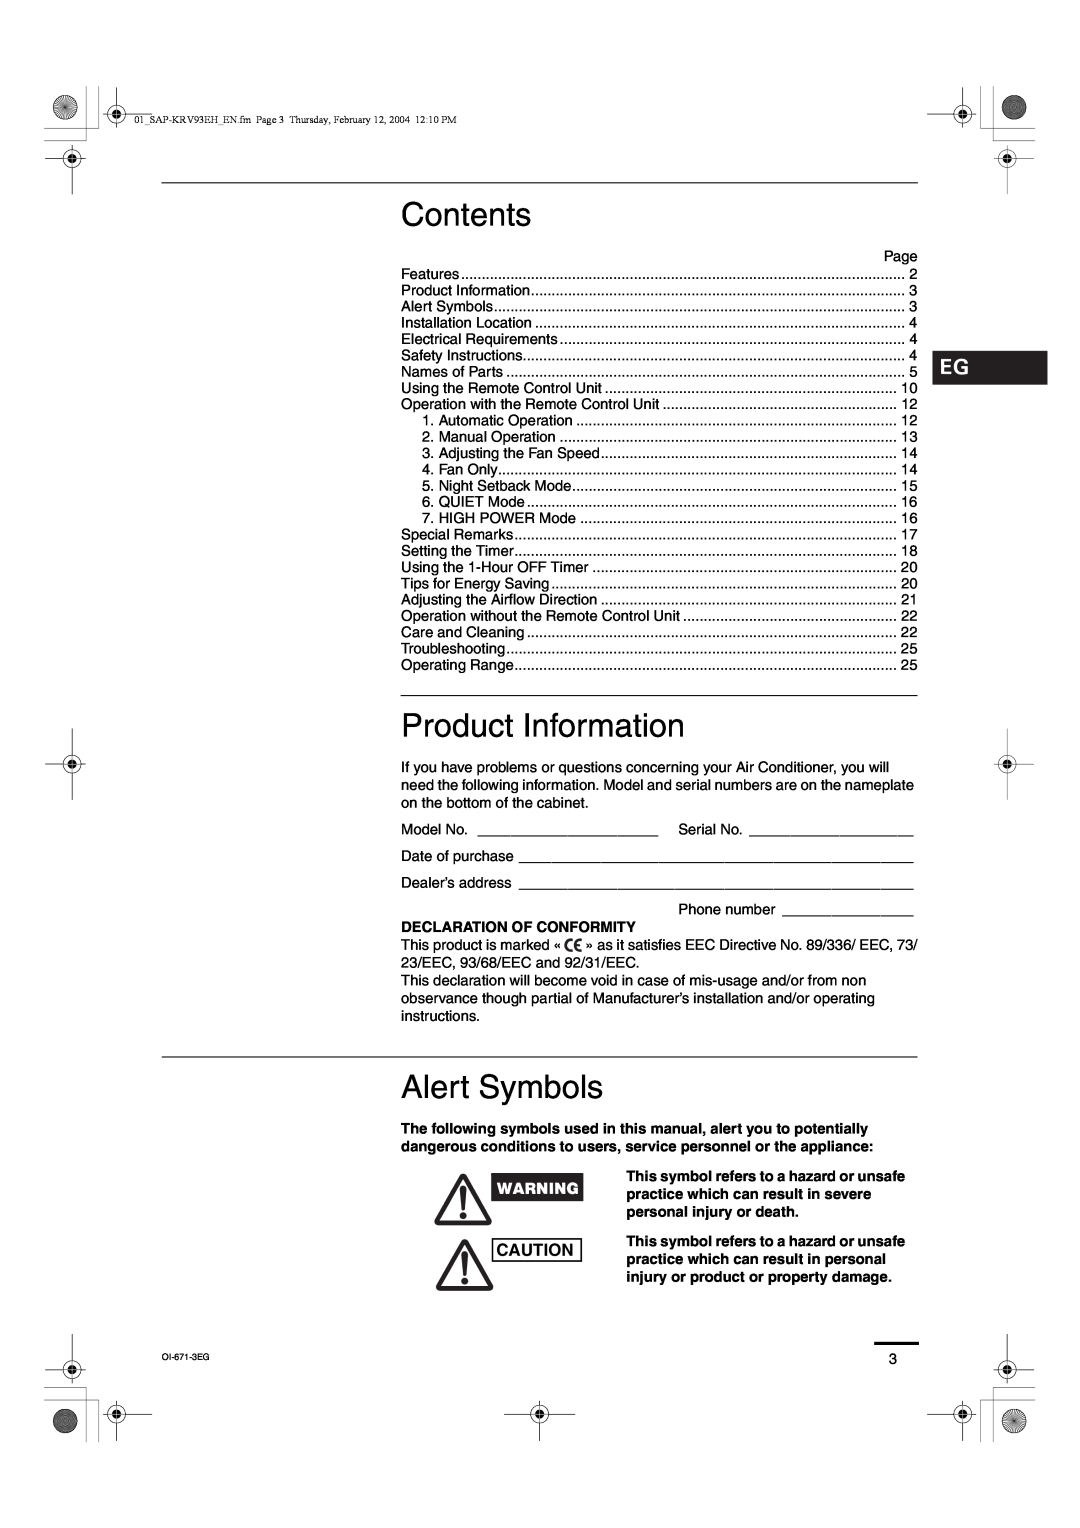 Sanyo SAP-KRV93EH, SAP-KRV123EH instruction manual Contents, Product Information, Alert Symbols 